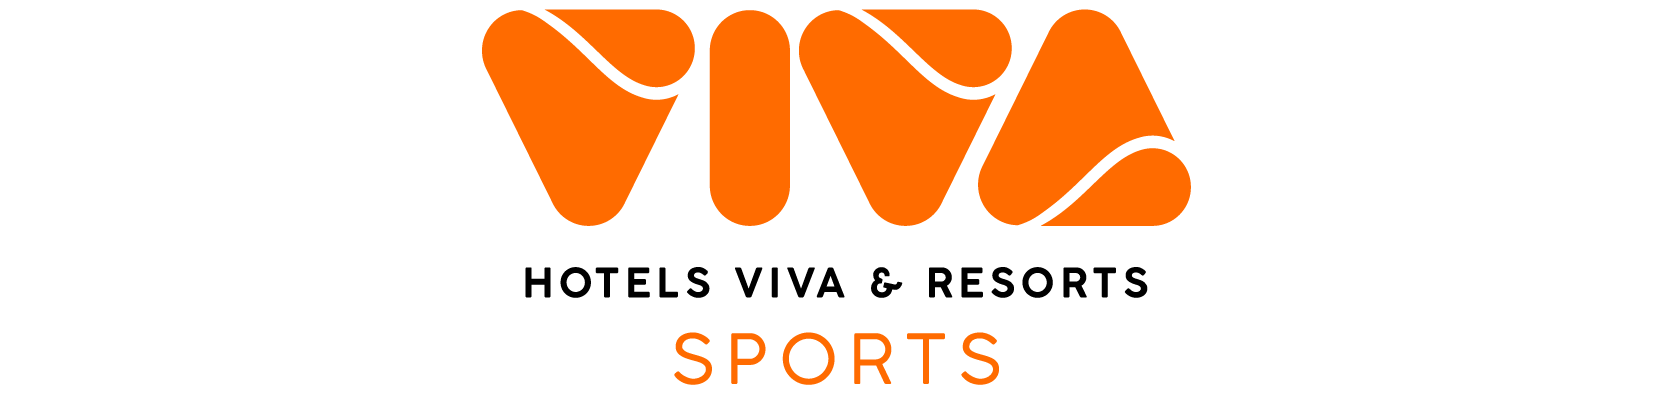 viva sports